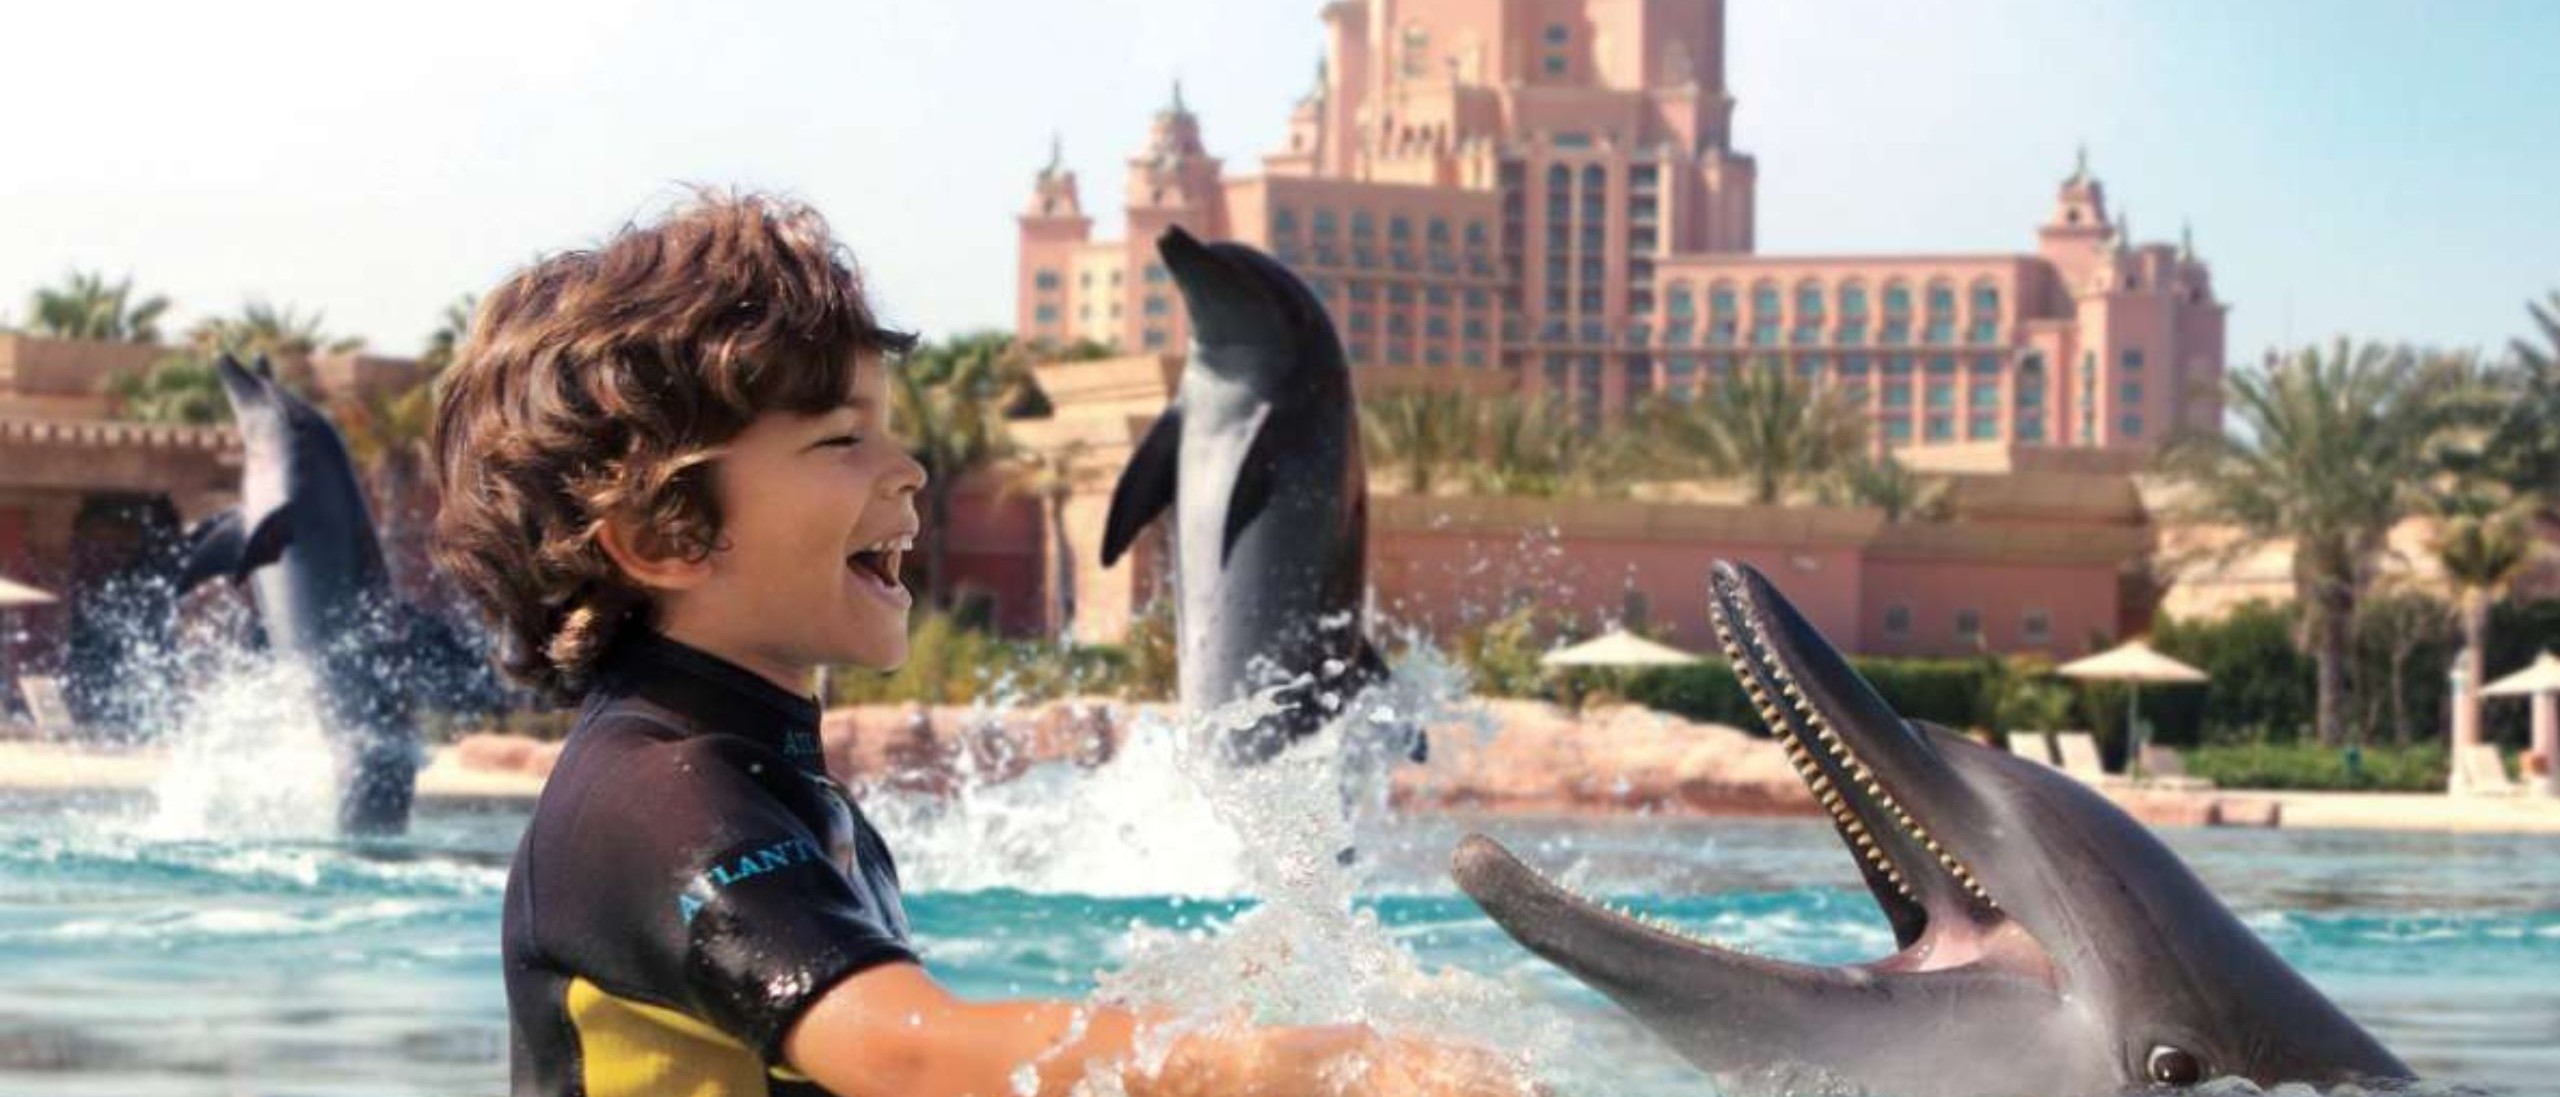 Visiter Dubai en famille nager avec dauphins